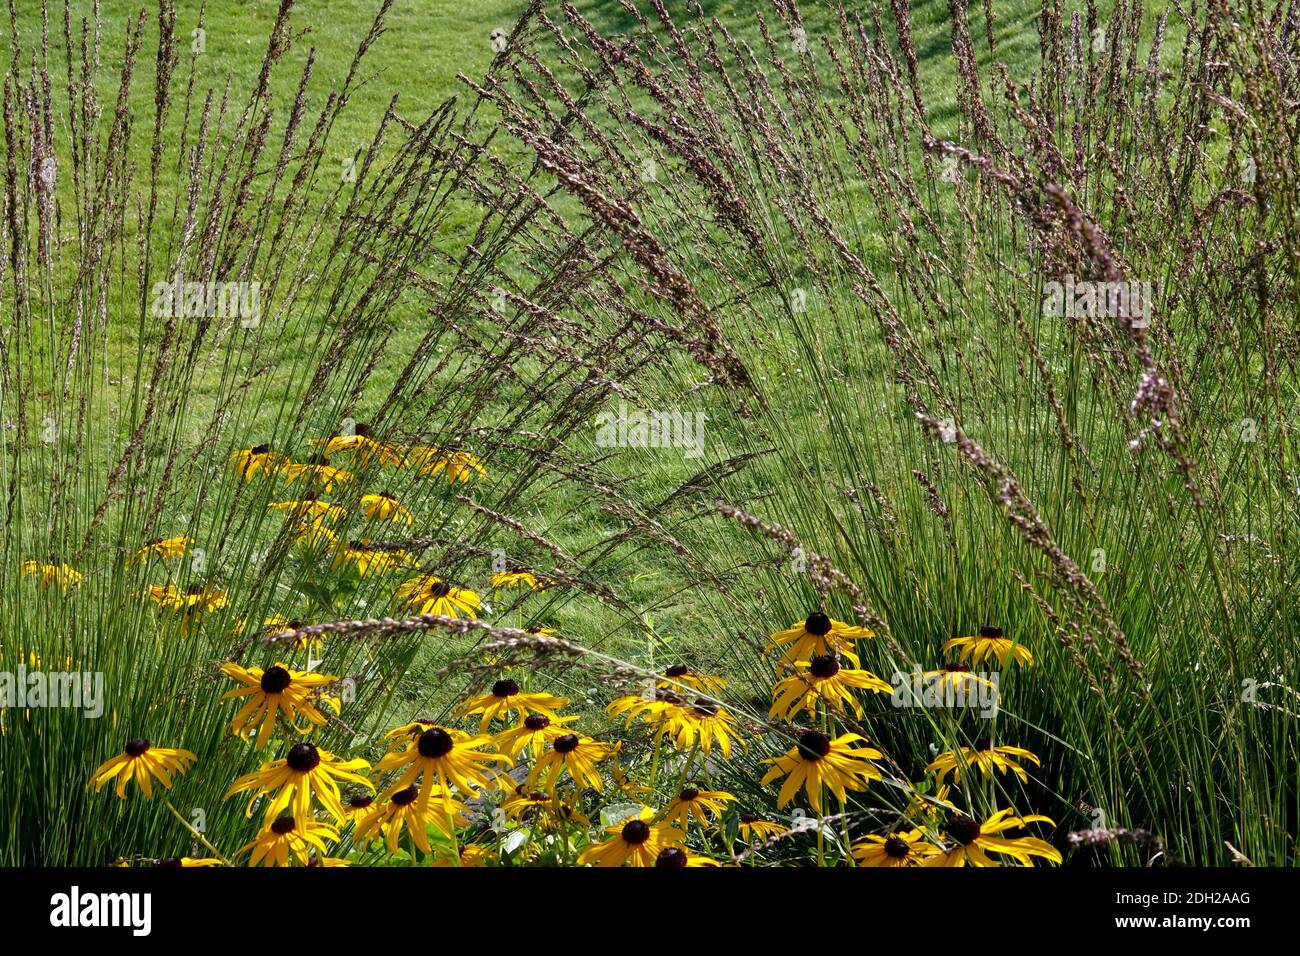 Molinia caerulea grass Rudbeckia Cluster, Clump grass, Molinia, Moor-grass Molinia caerulea 'Edith Dudszus' Stock Photo